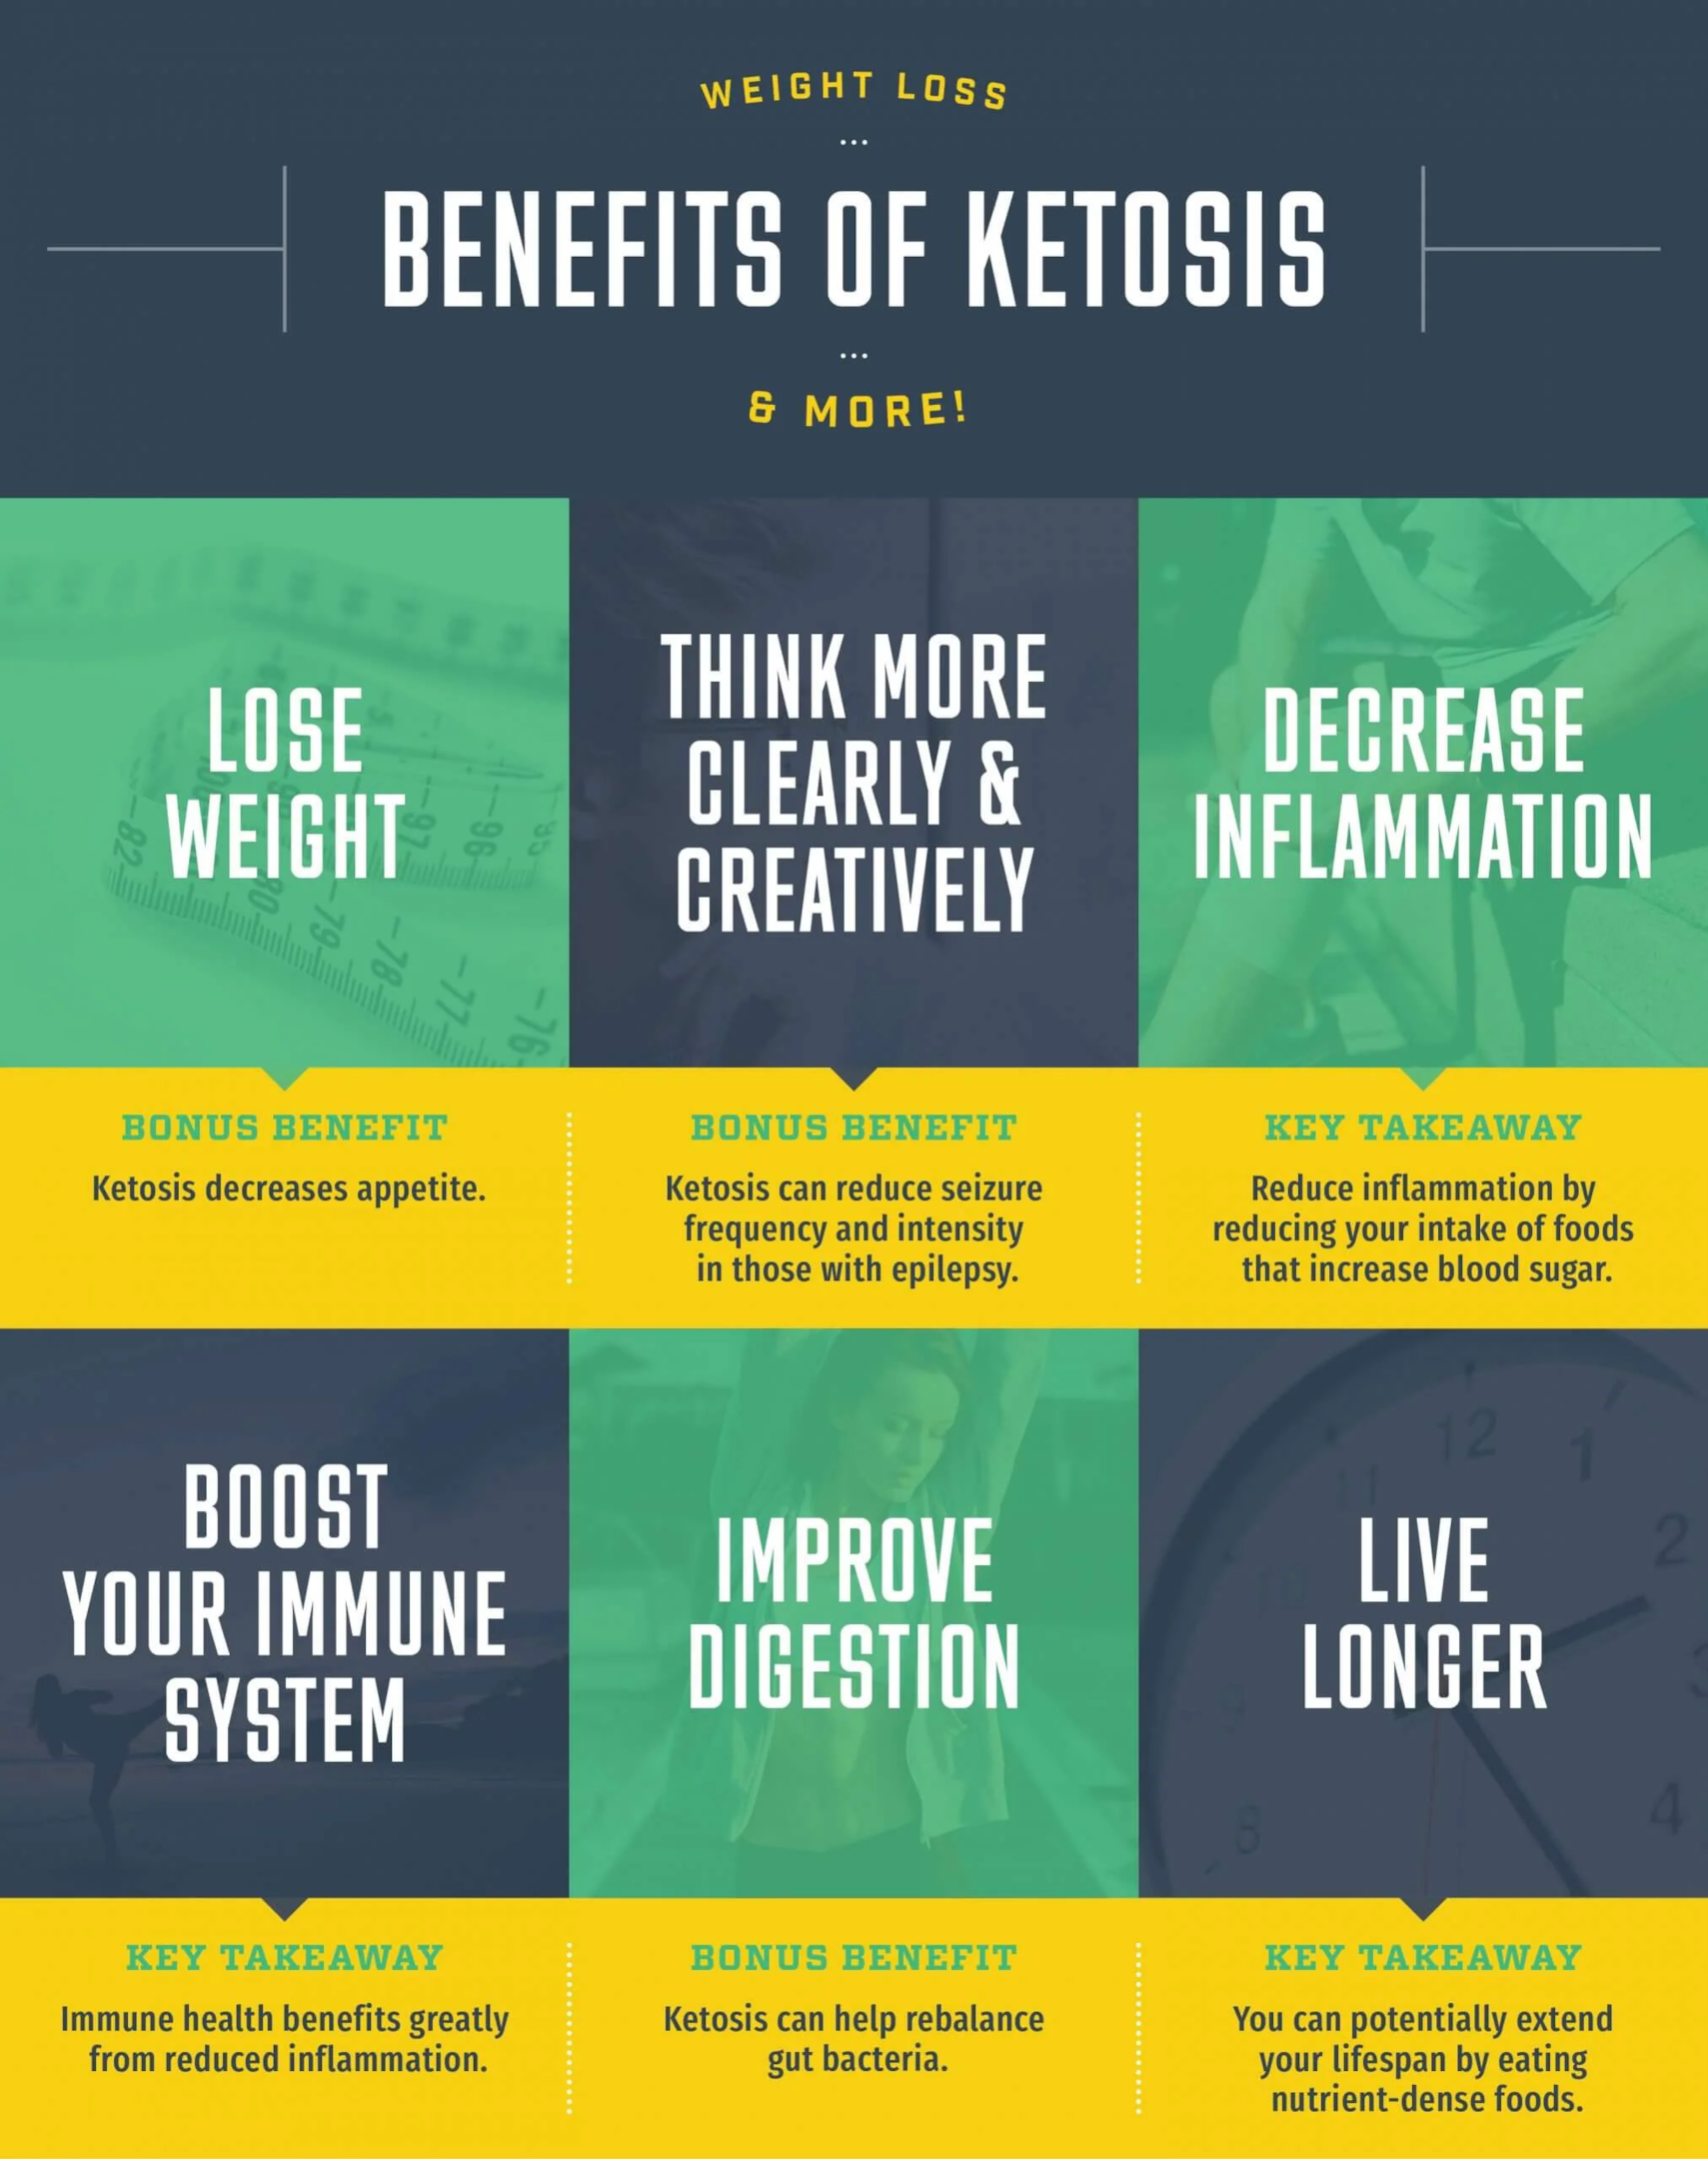 Benefits of ketosis